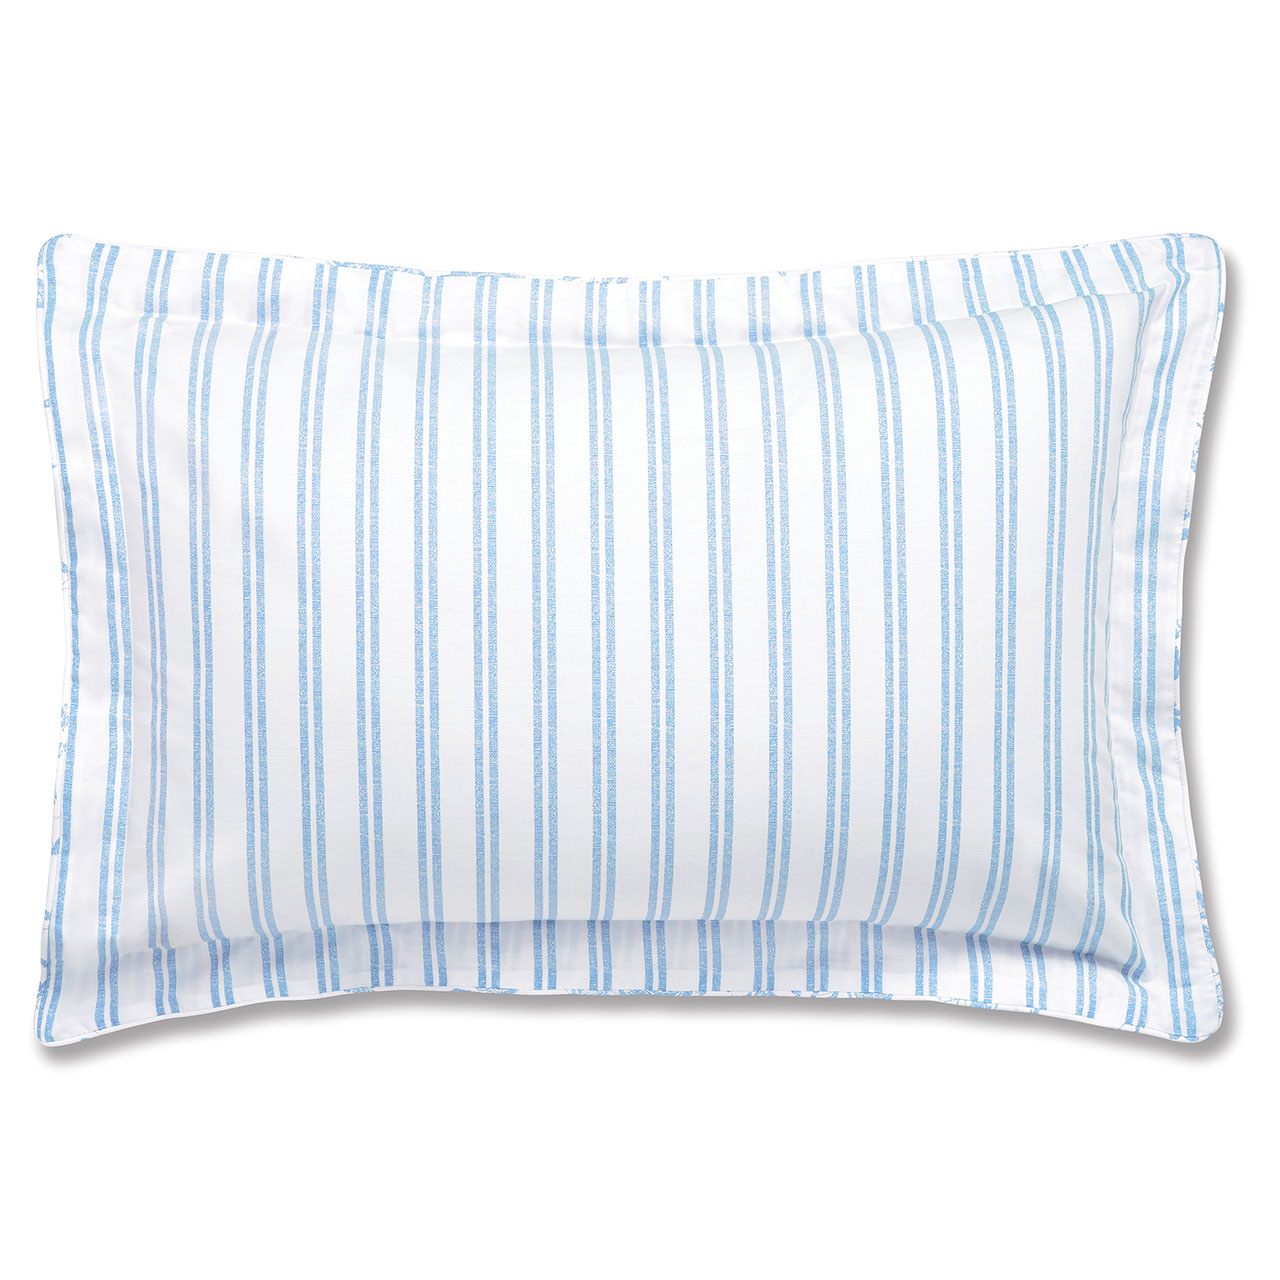 Cosette Oxford Pillowcases - Pair